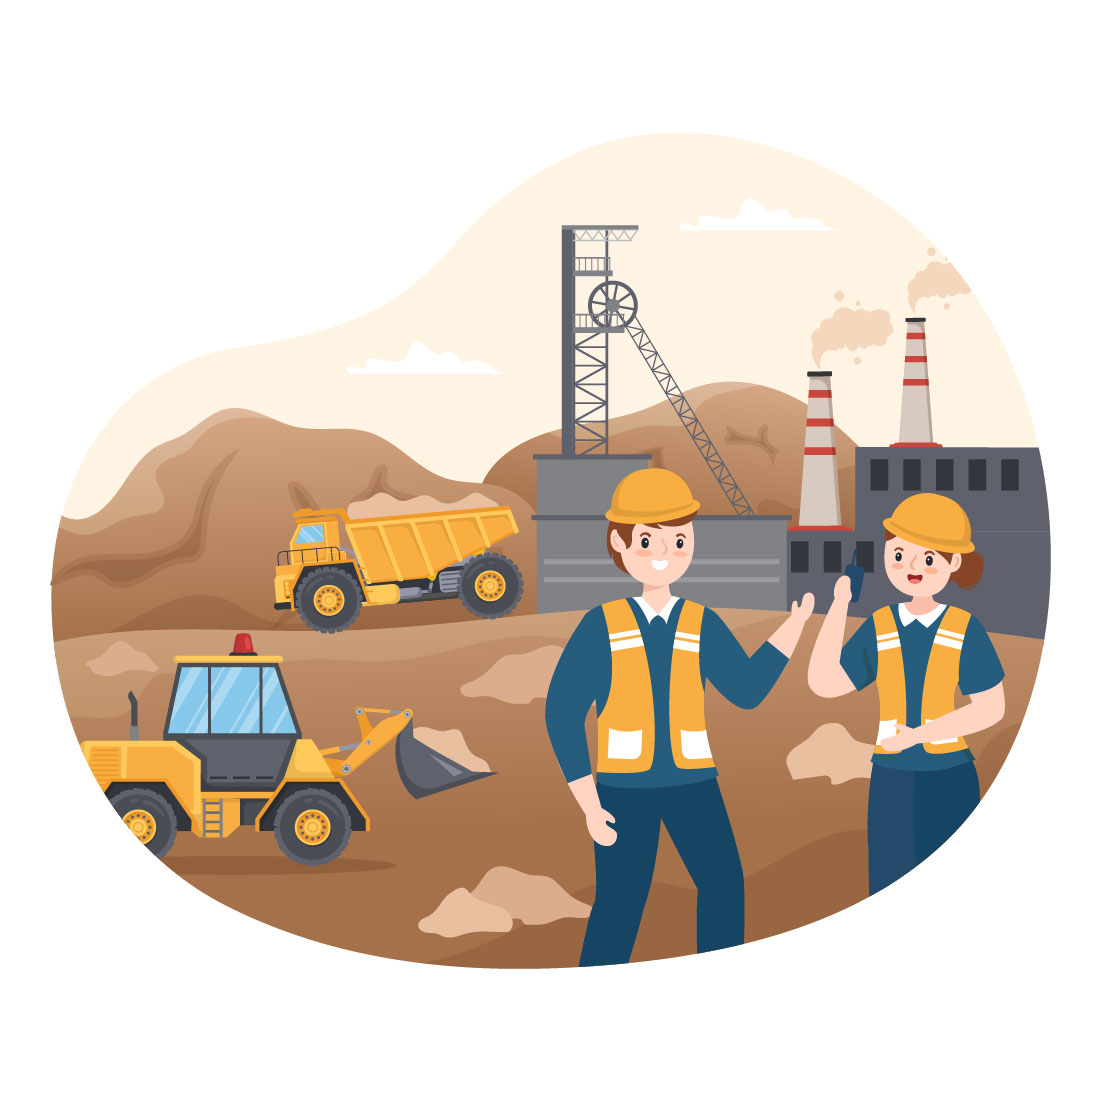 Adorable cartoon image of a mining company with heavy yellow dump trucks.